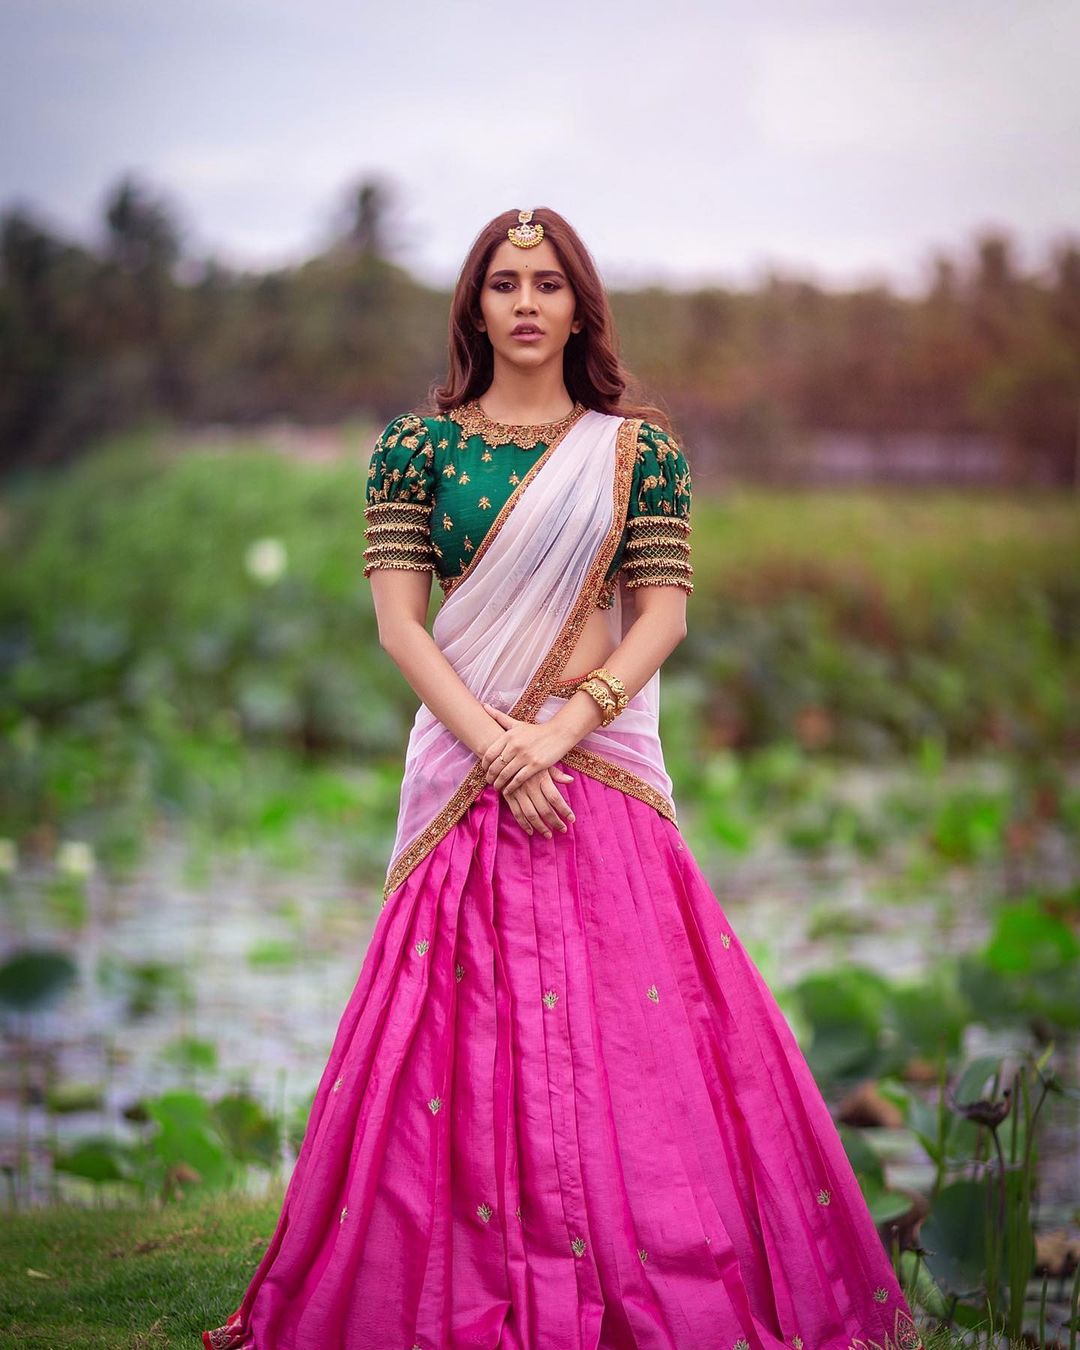 Nabha Look Fabulous In Pink Lehenga Outfit : Nabha Natesh Stylish and Traditional Outfit Looks